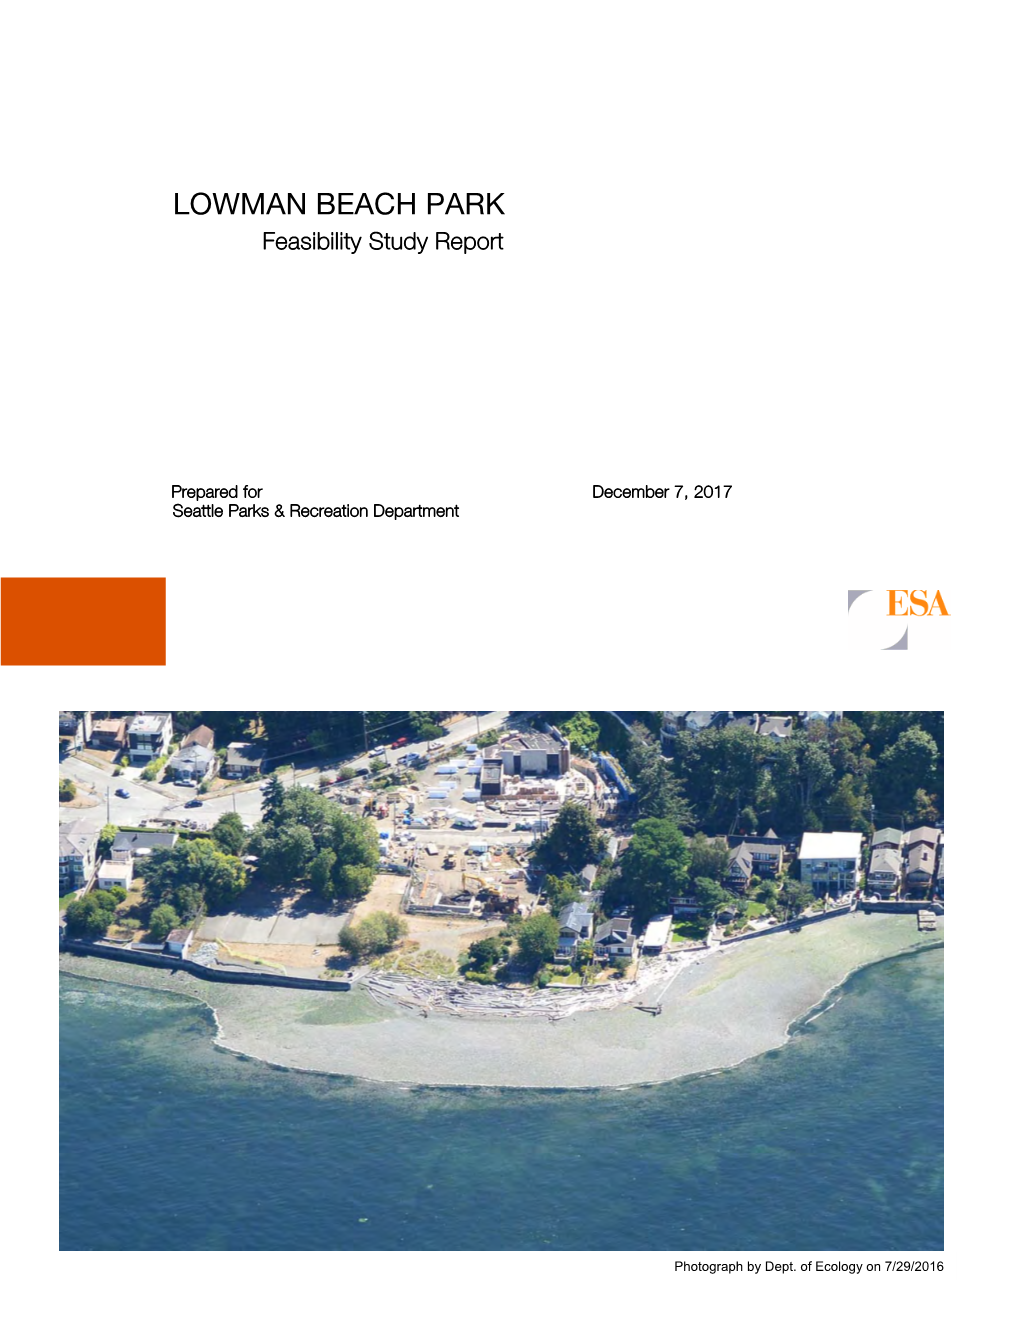 LOWMAN BEACH PARK Feasibility Study Report